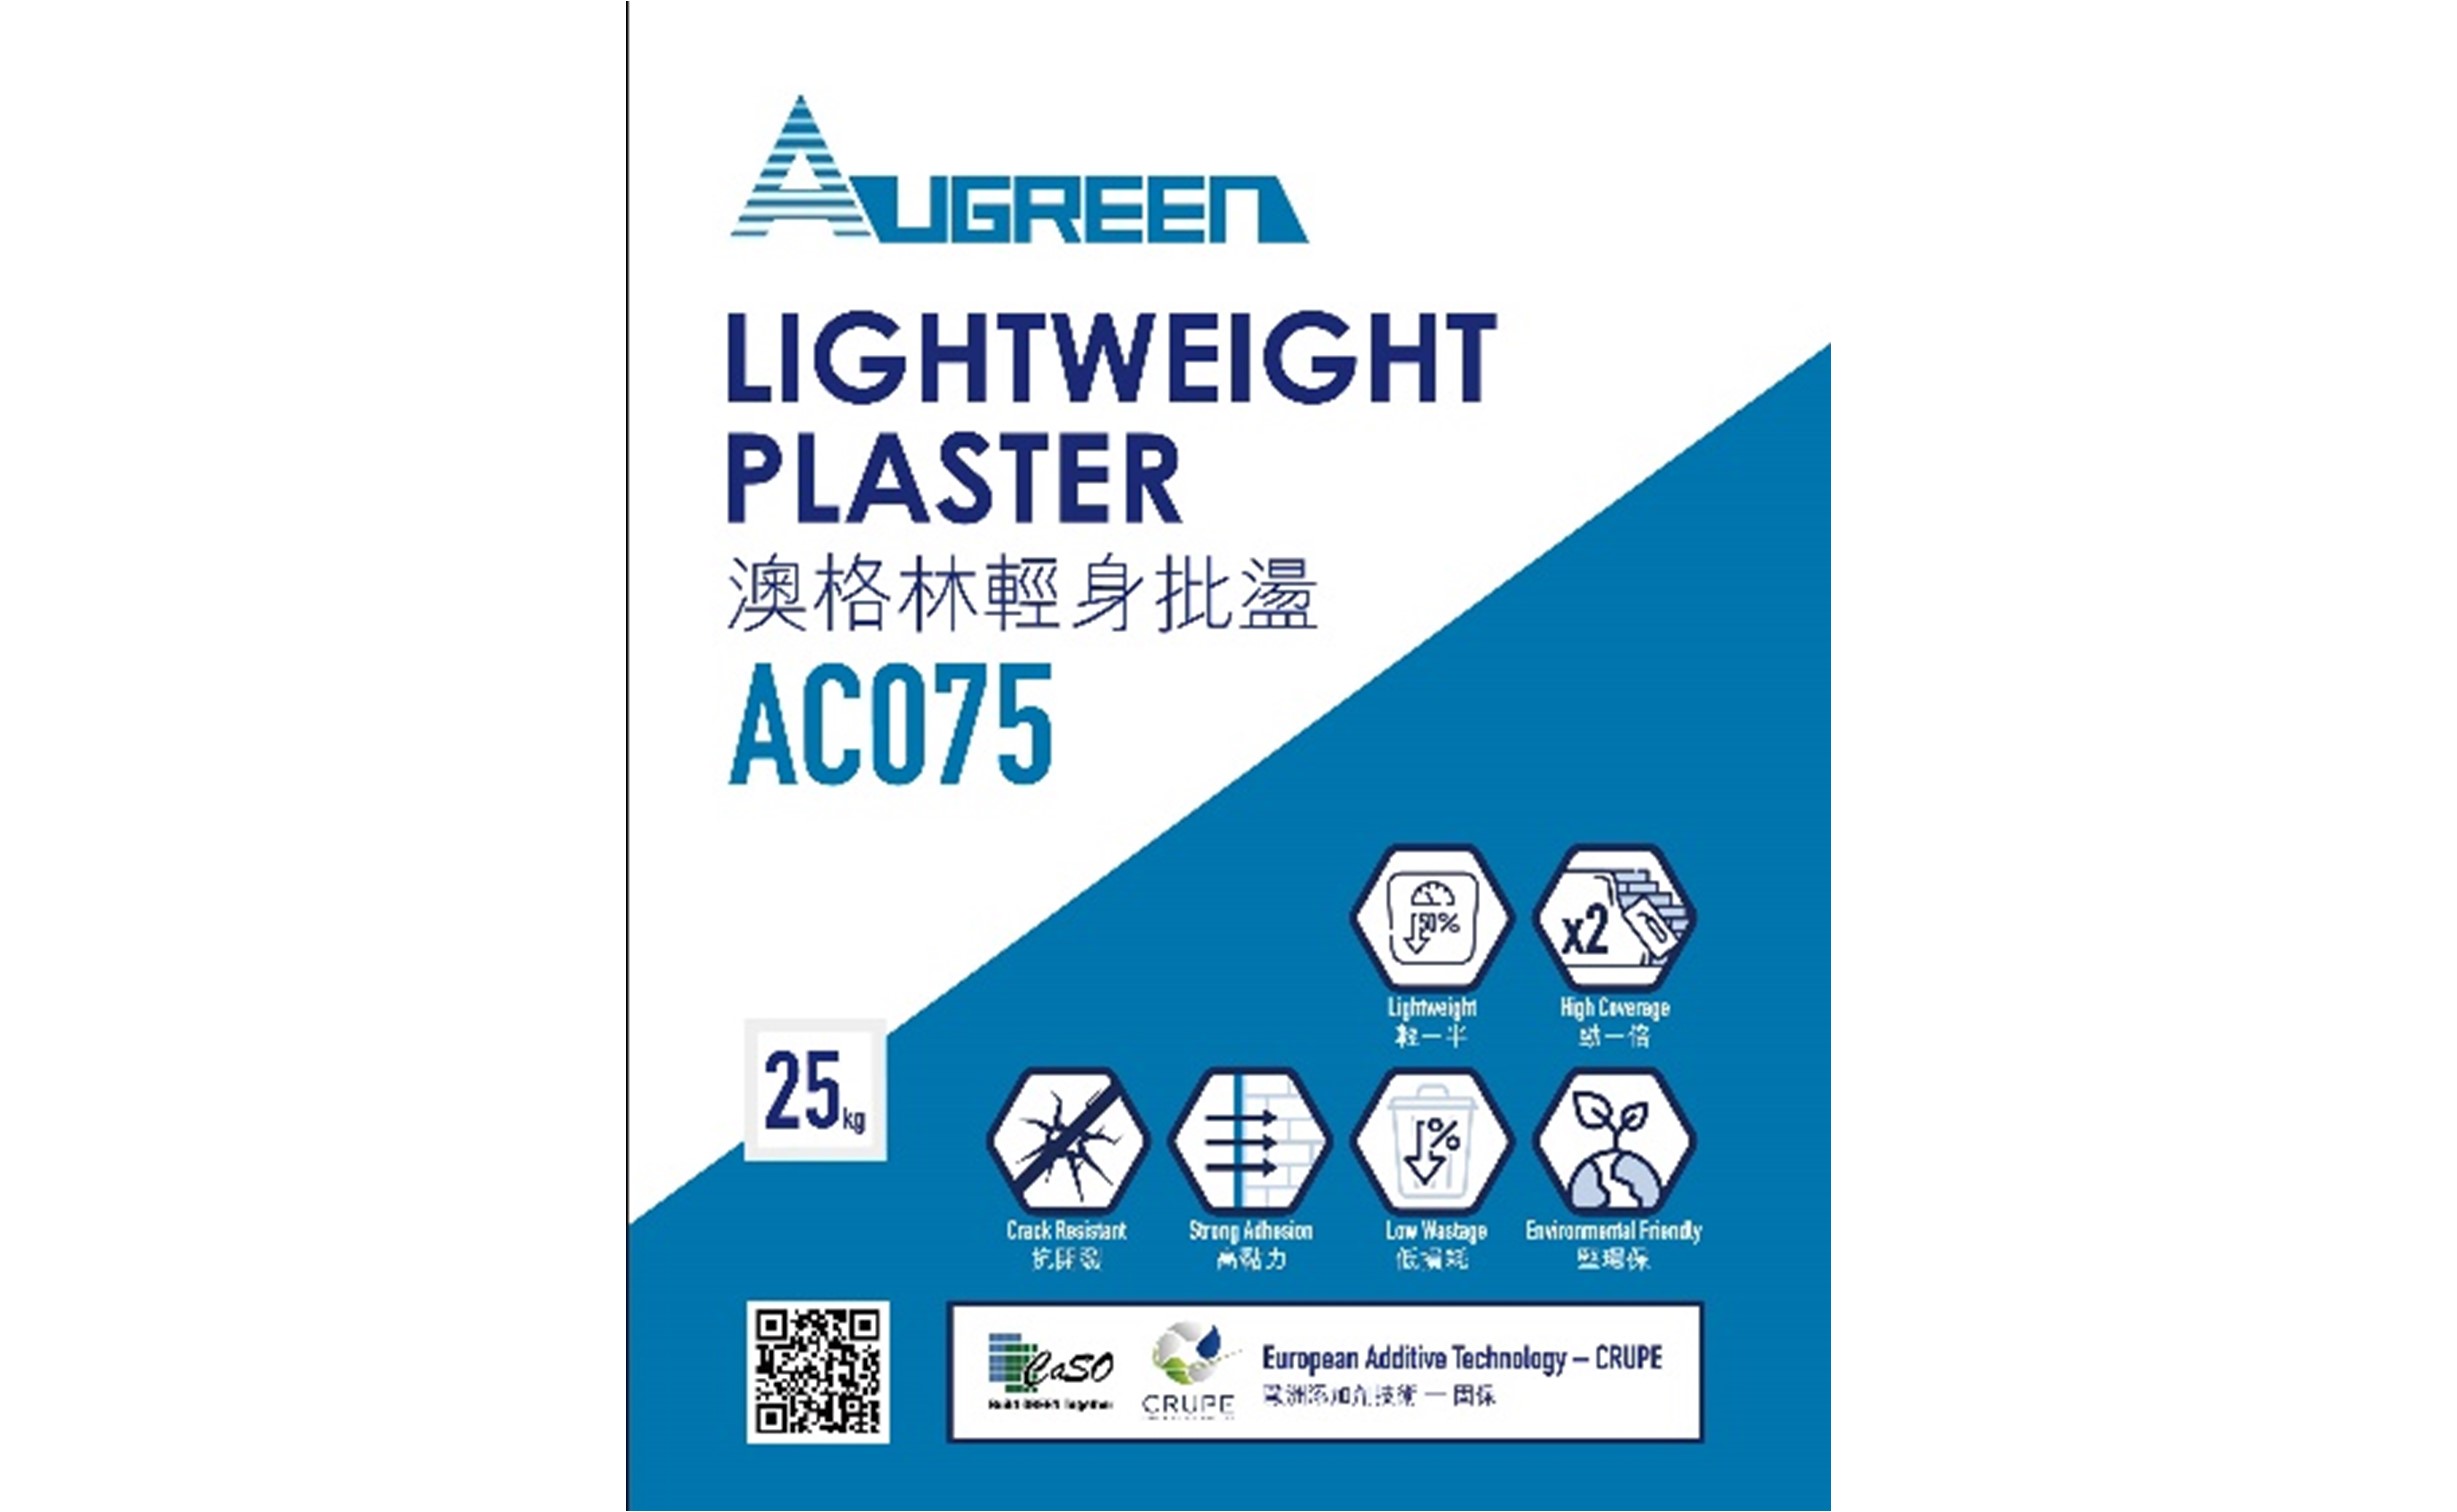 AUGREEN Lightweight Plaster Model: AC075